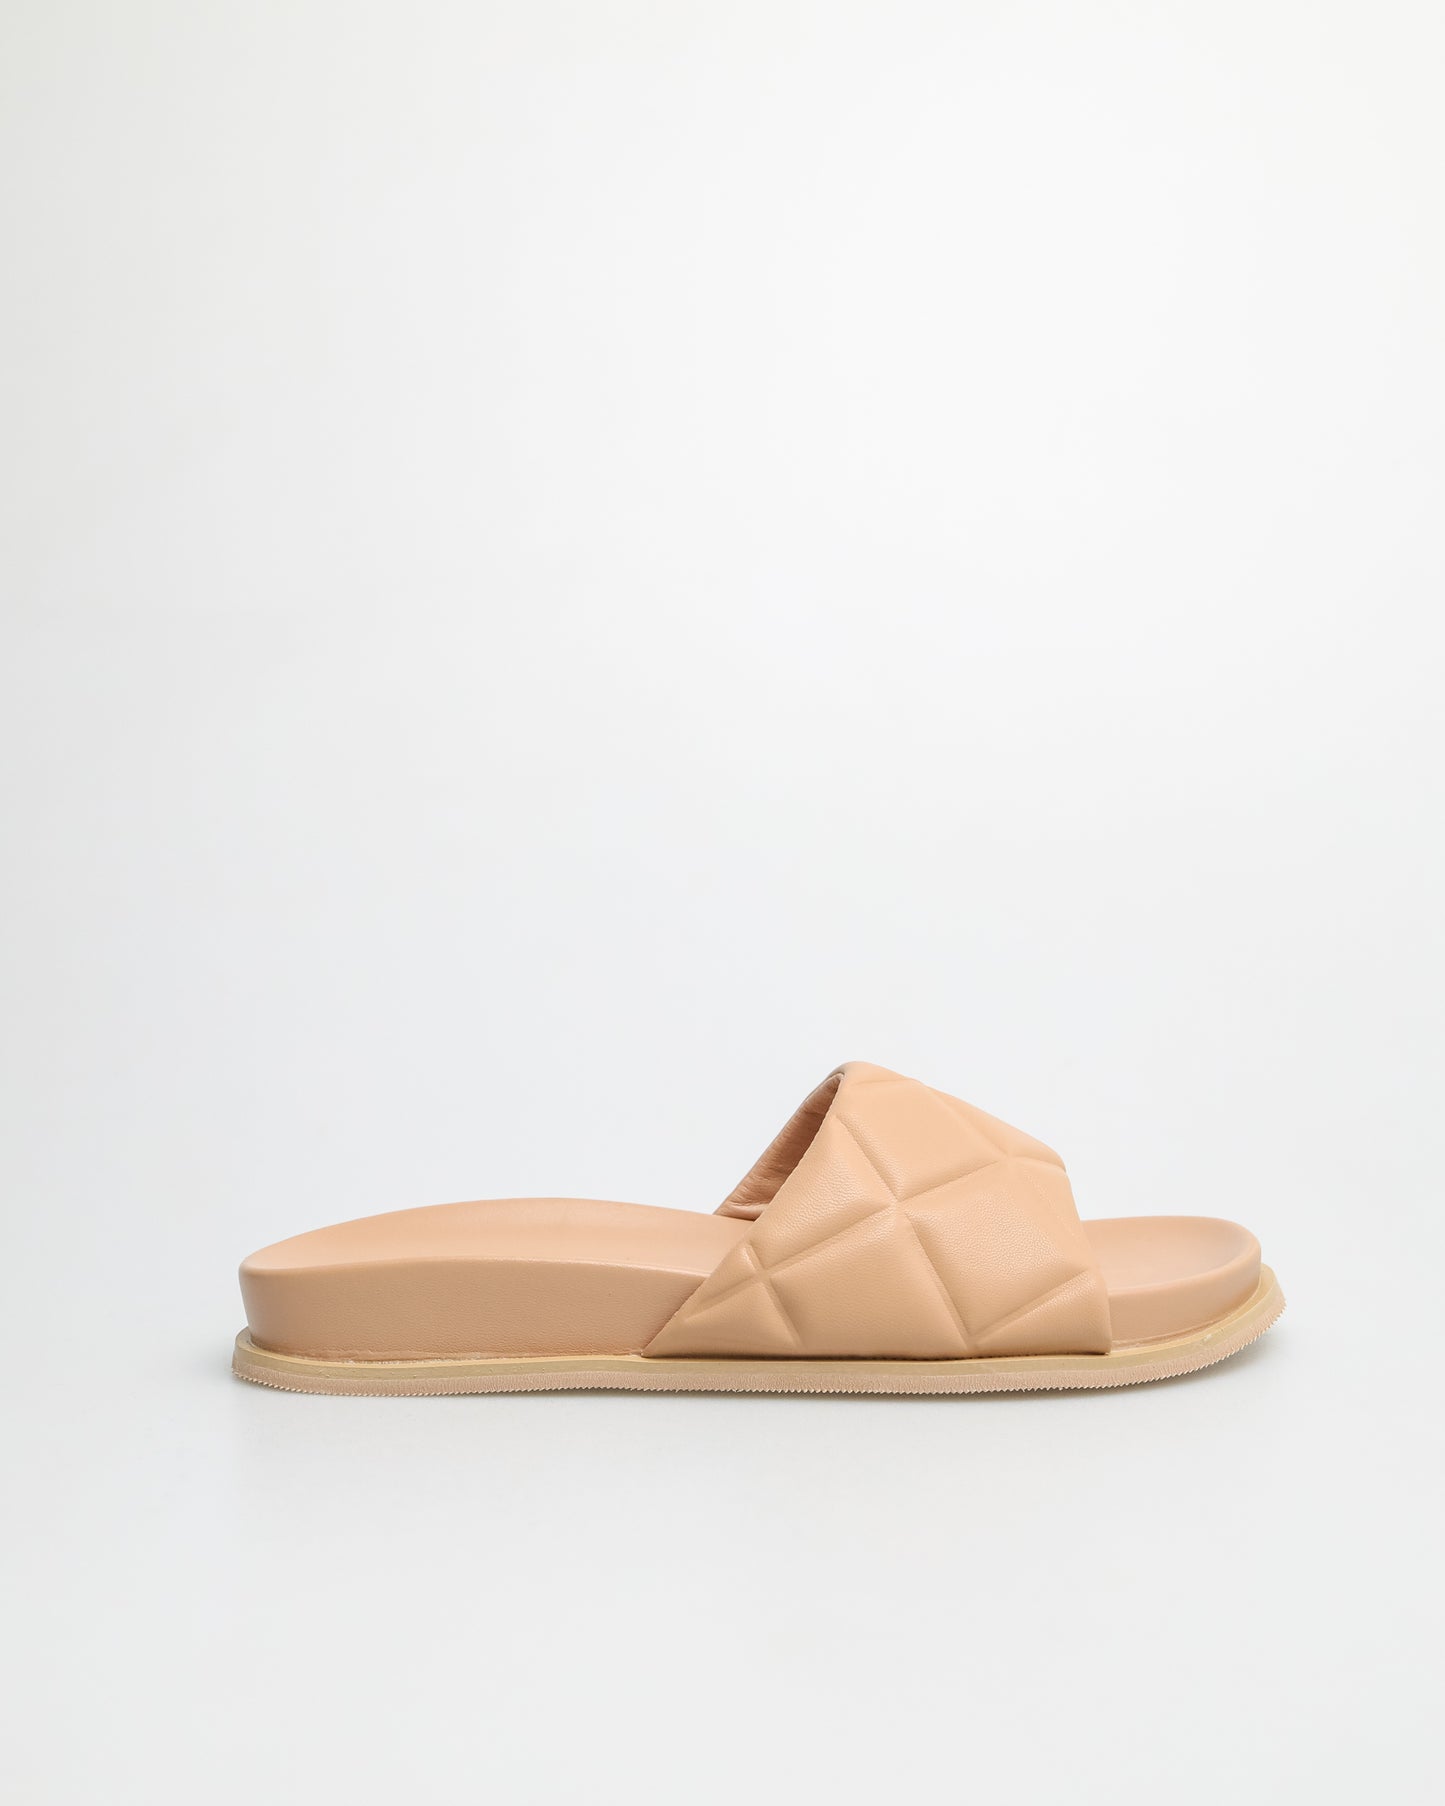 Tomaz YX145 Ladies Sandals (Beige)